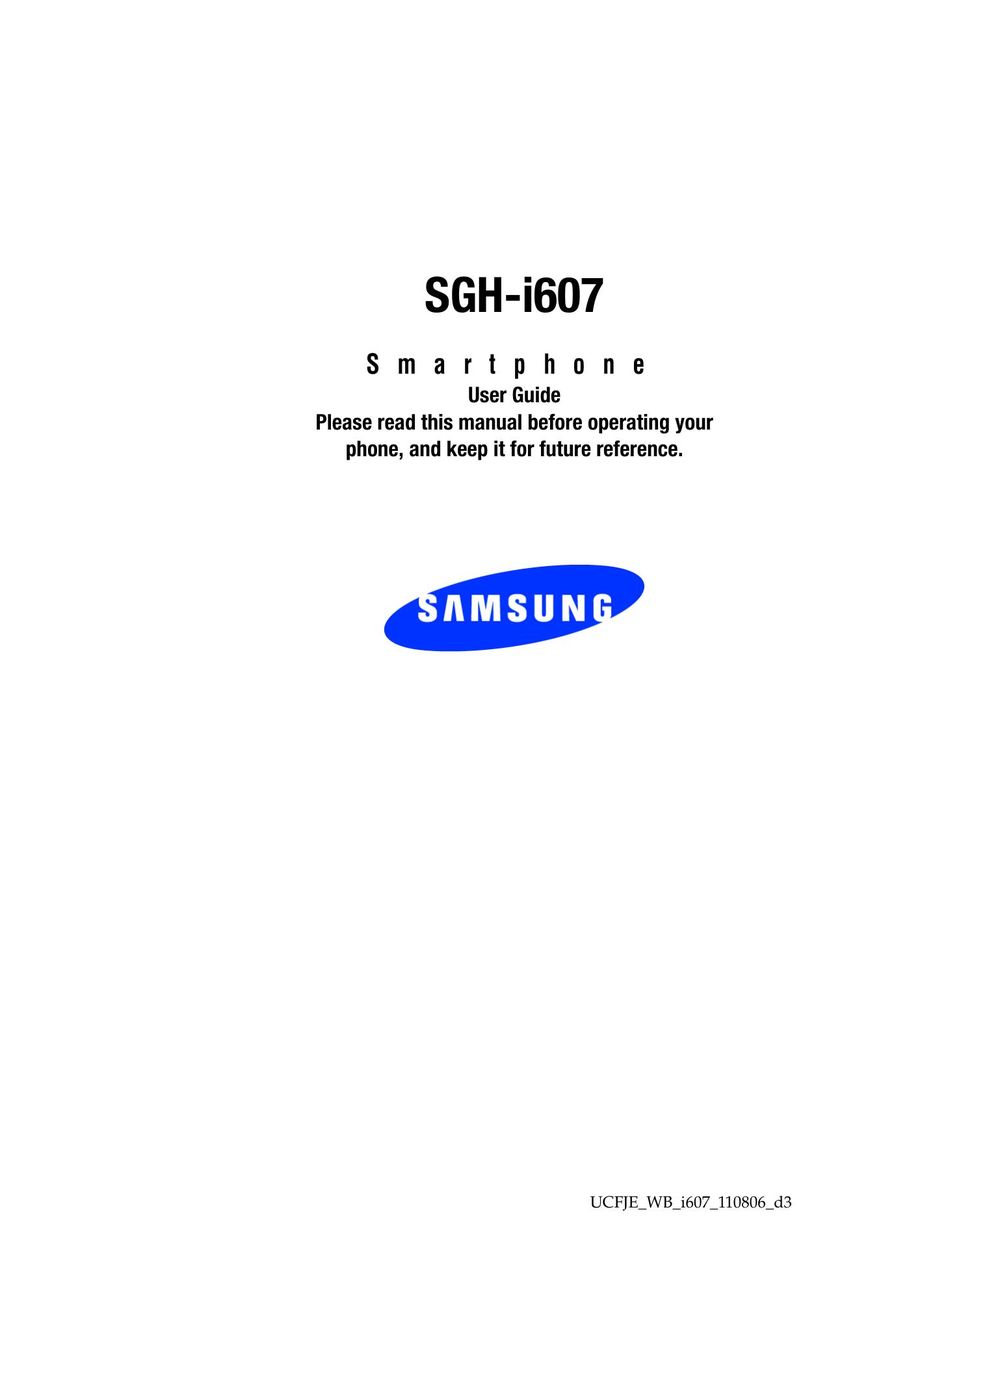 Samsung SGH-i607 CD Player User Manual